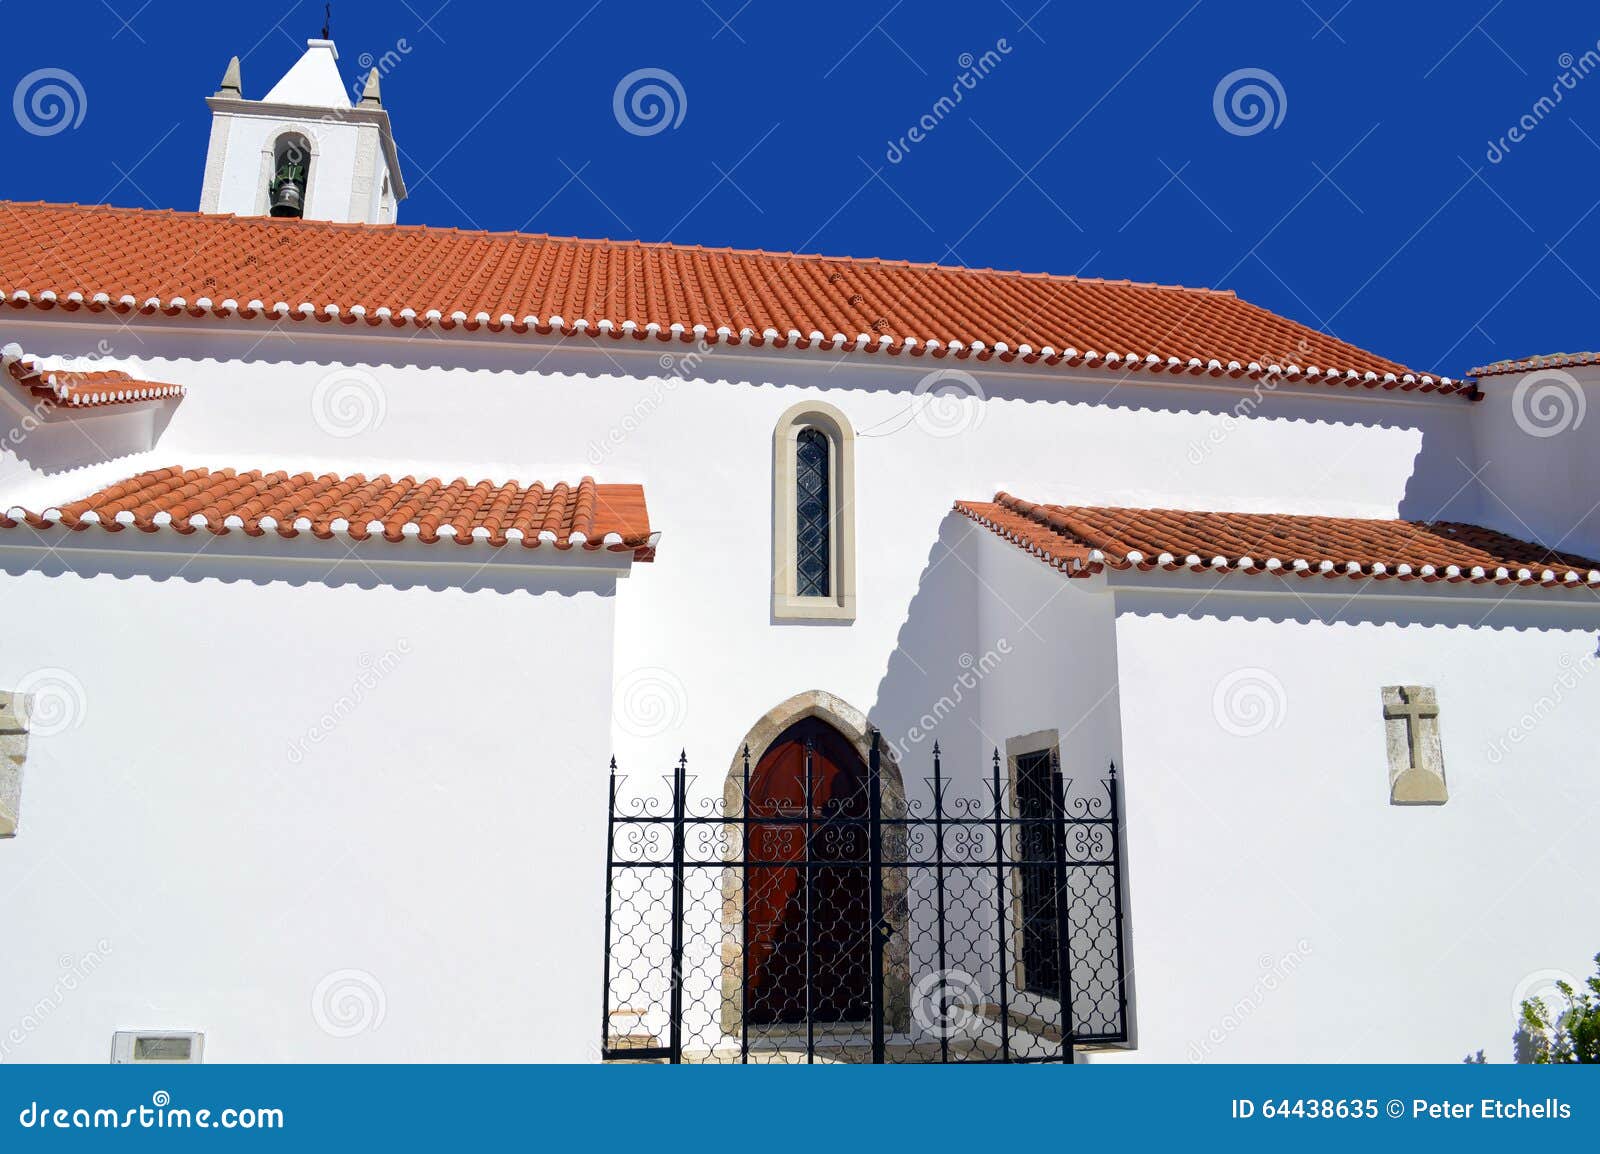 salir parish church in the serra de monchique mountain range of the algarve